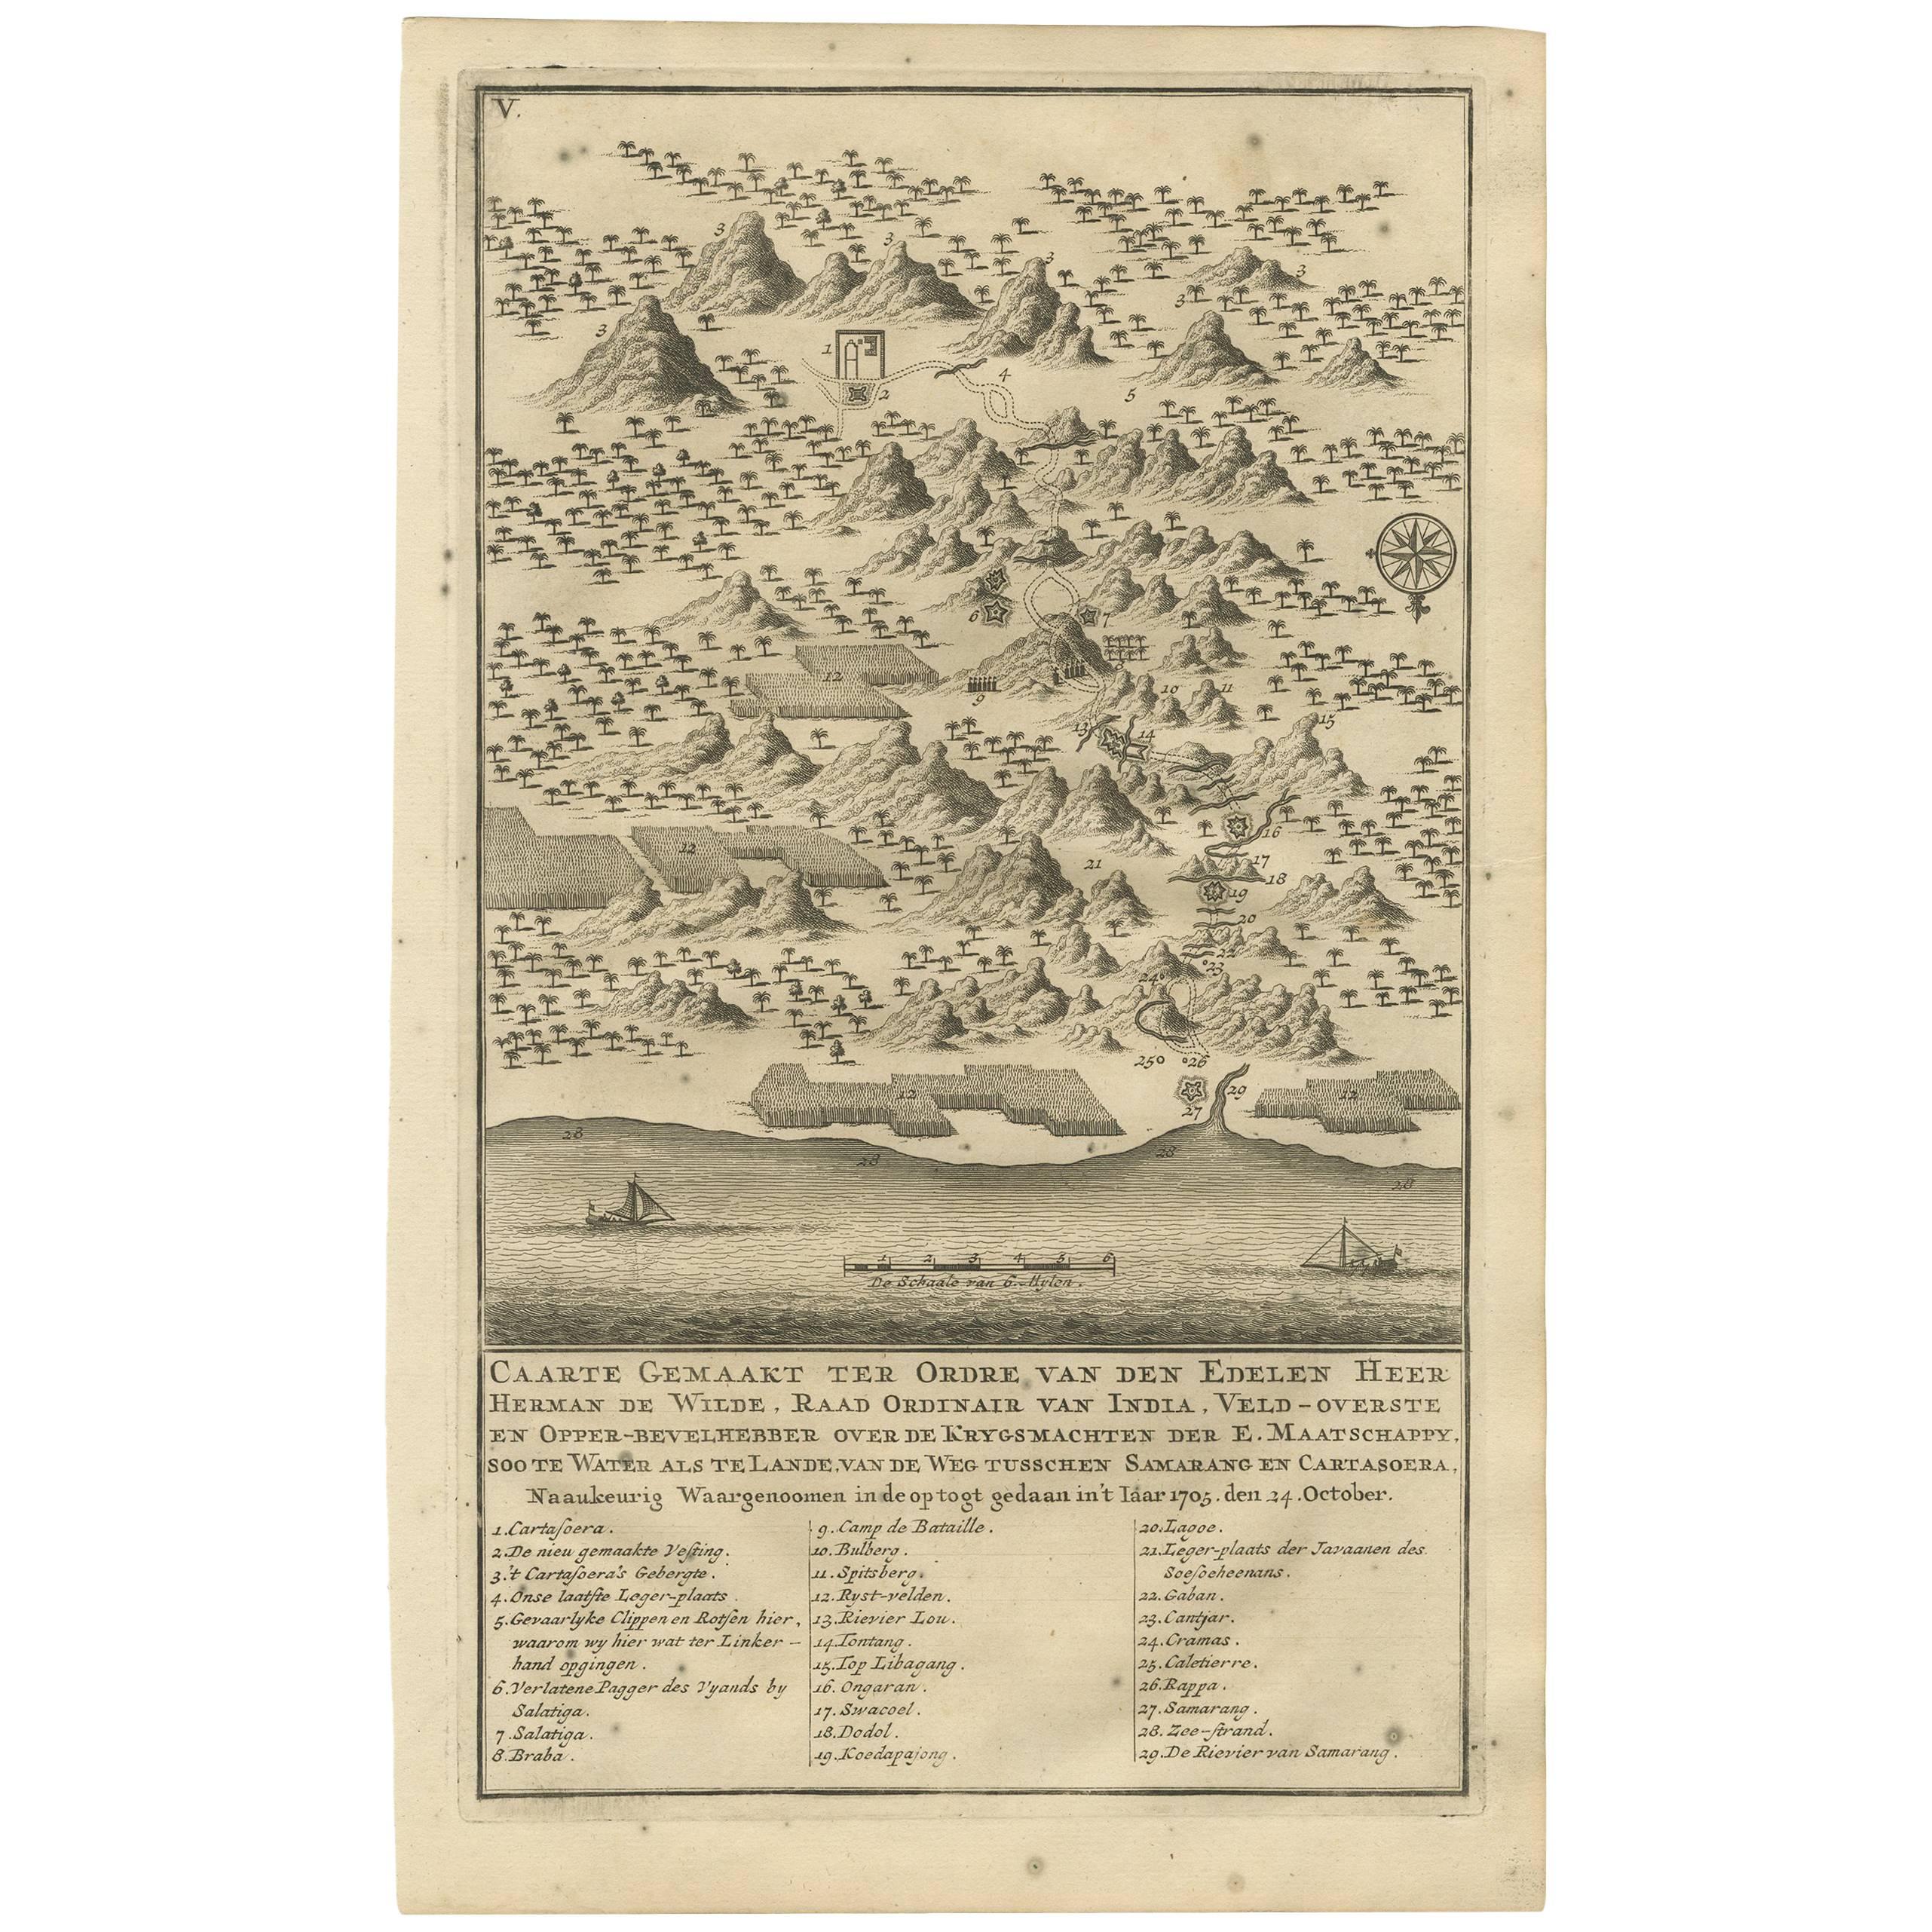 Antique Map of the Road Between Semarang & Kartosuro by F. Valentijn, 1726